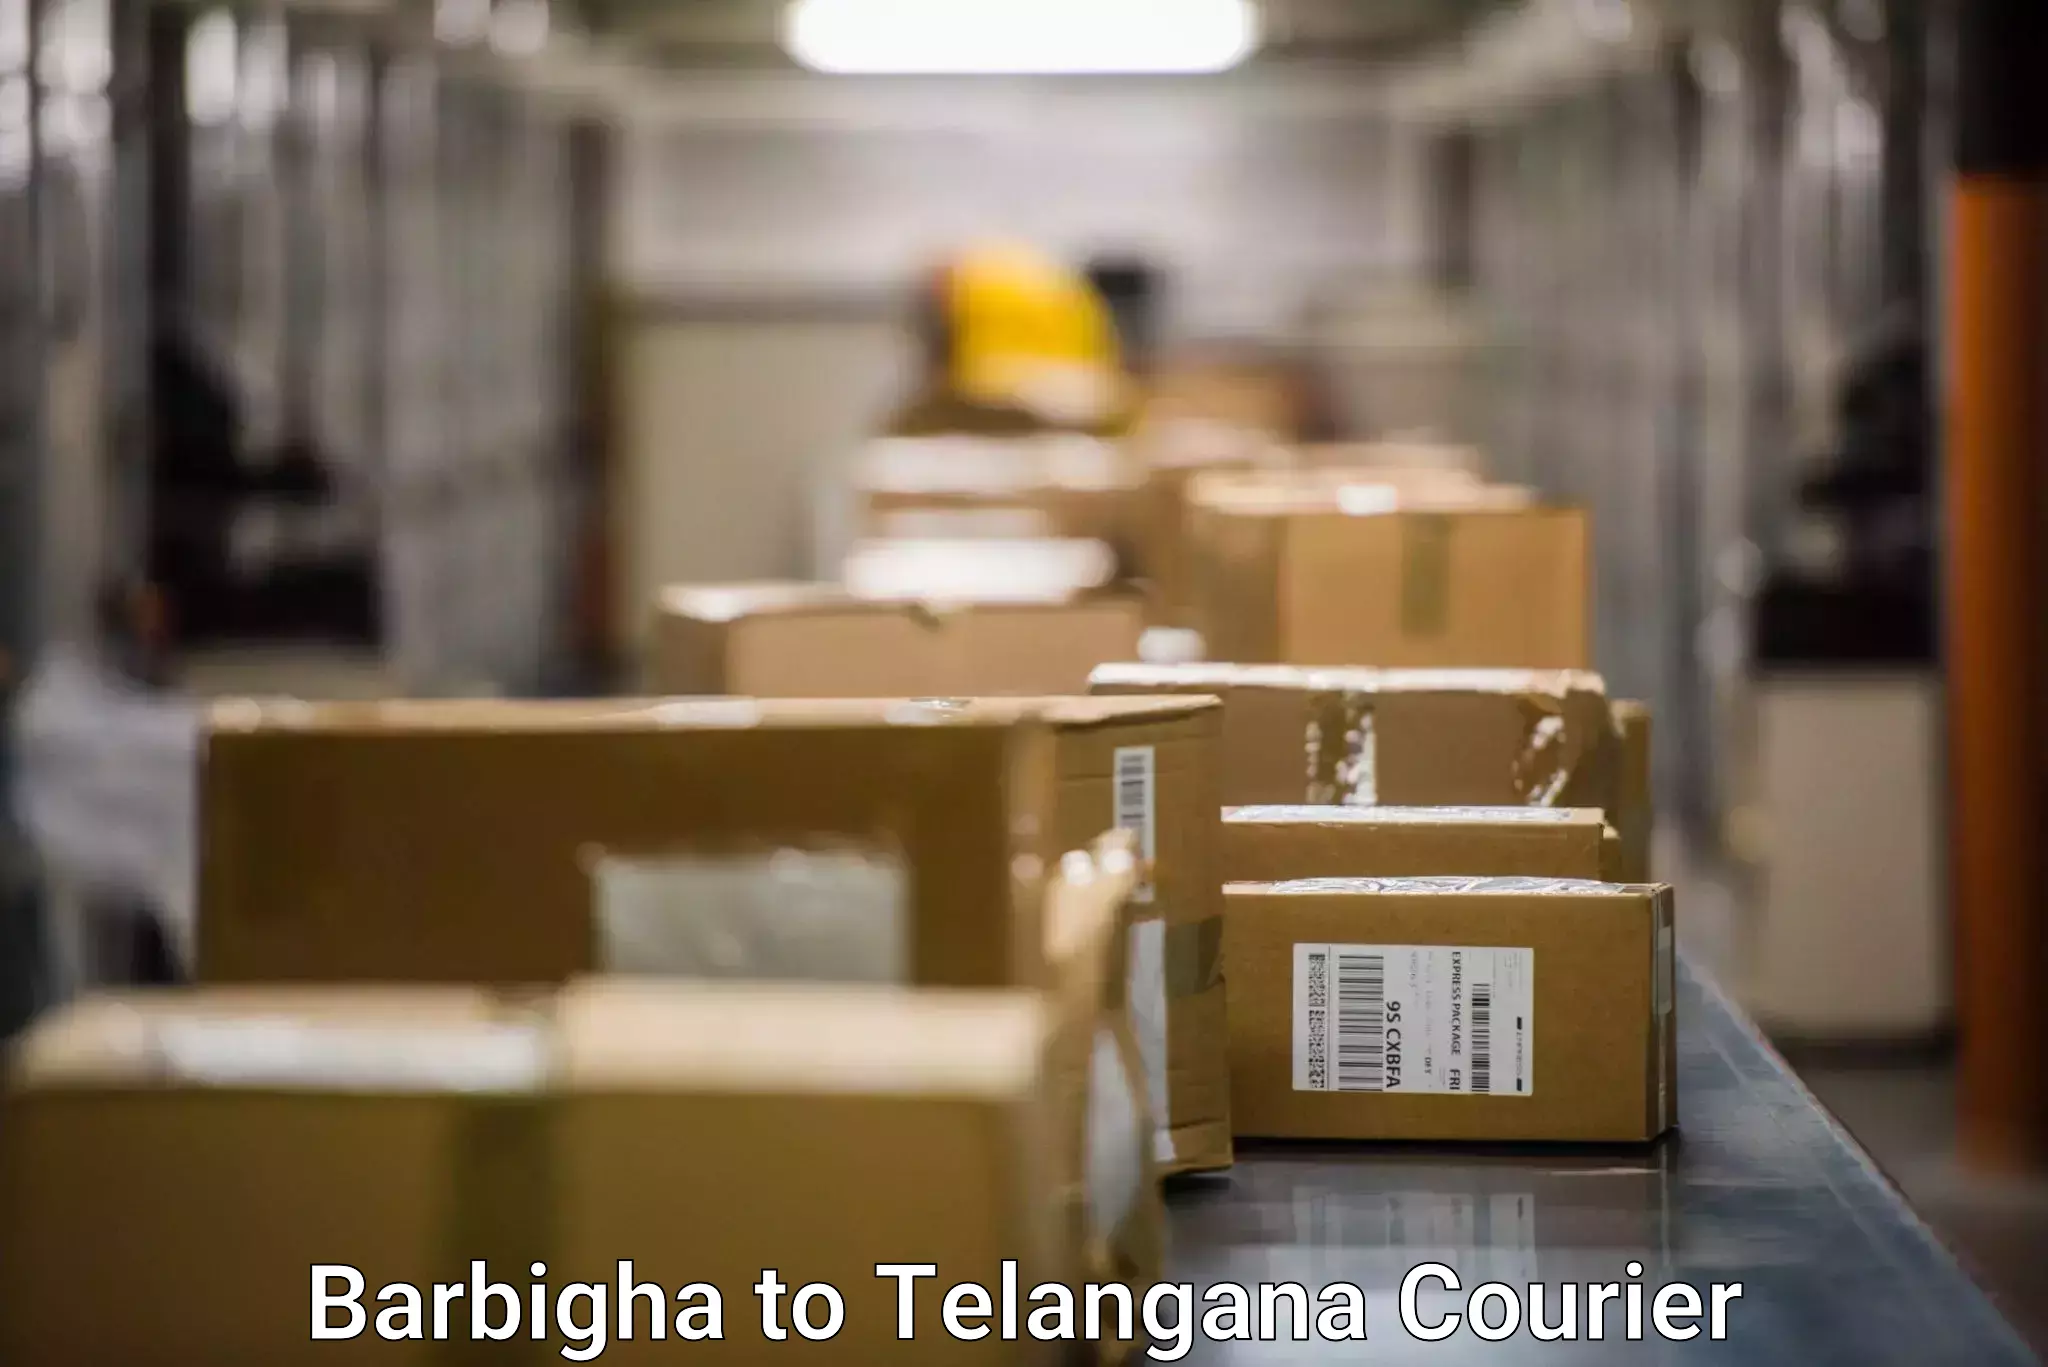 Courier service comparison Barbigha to Yellandu